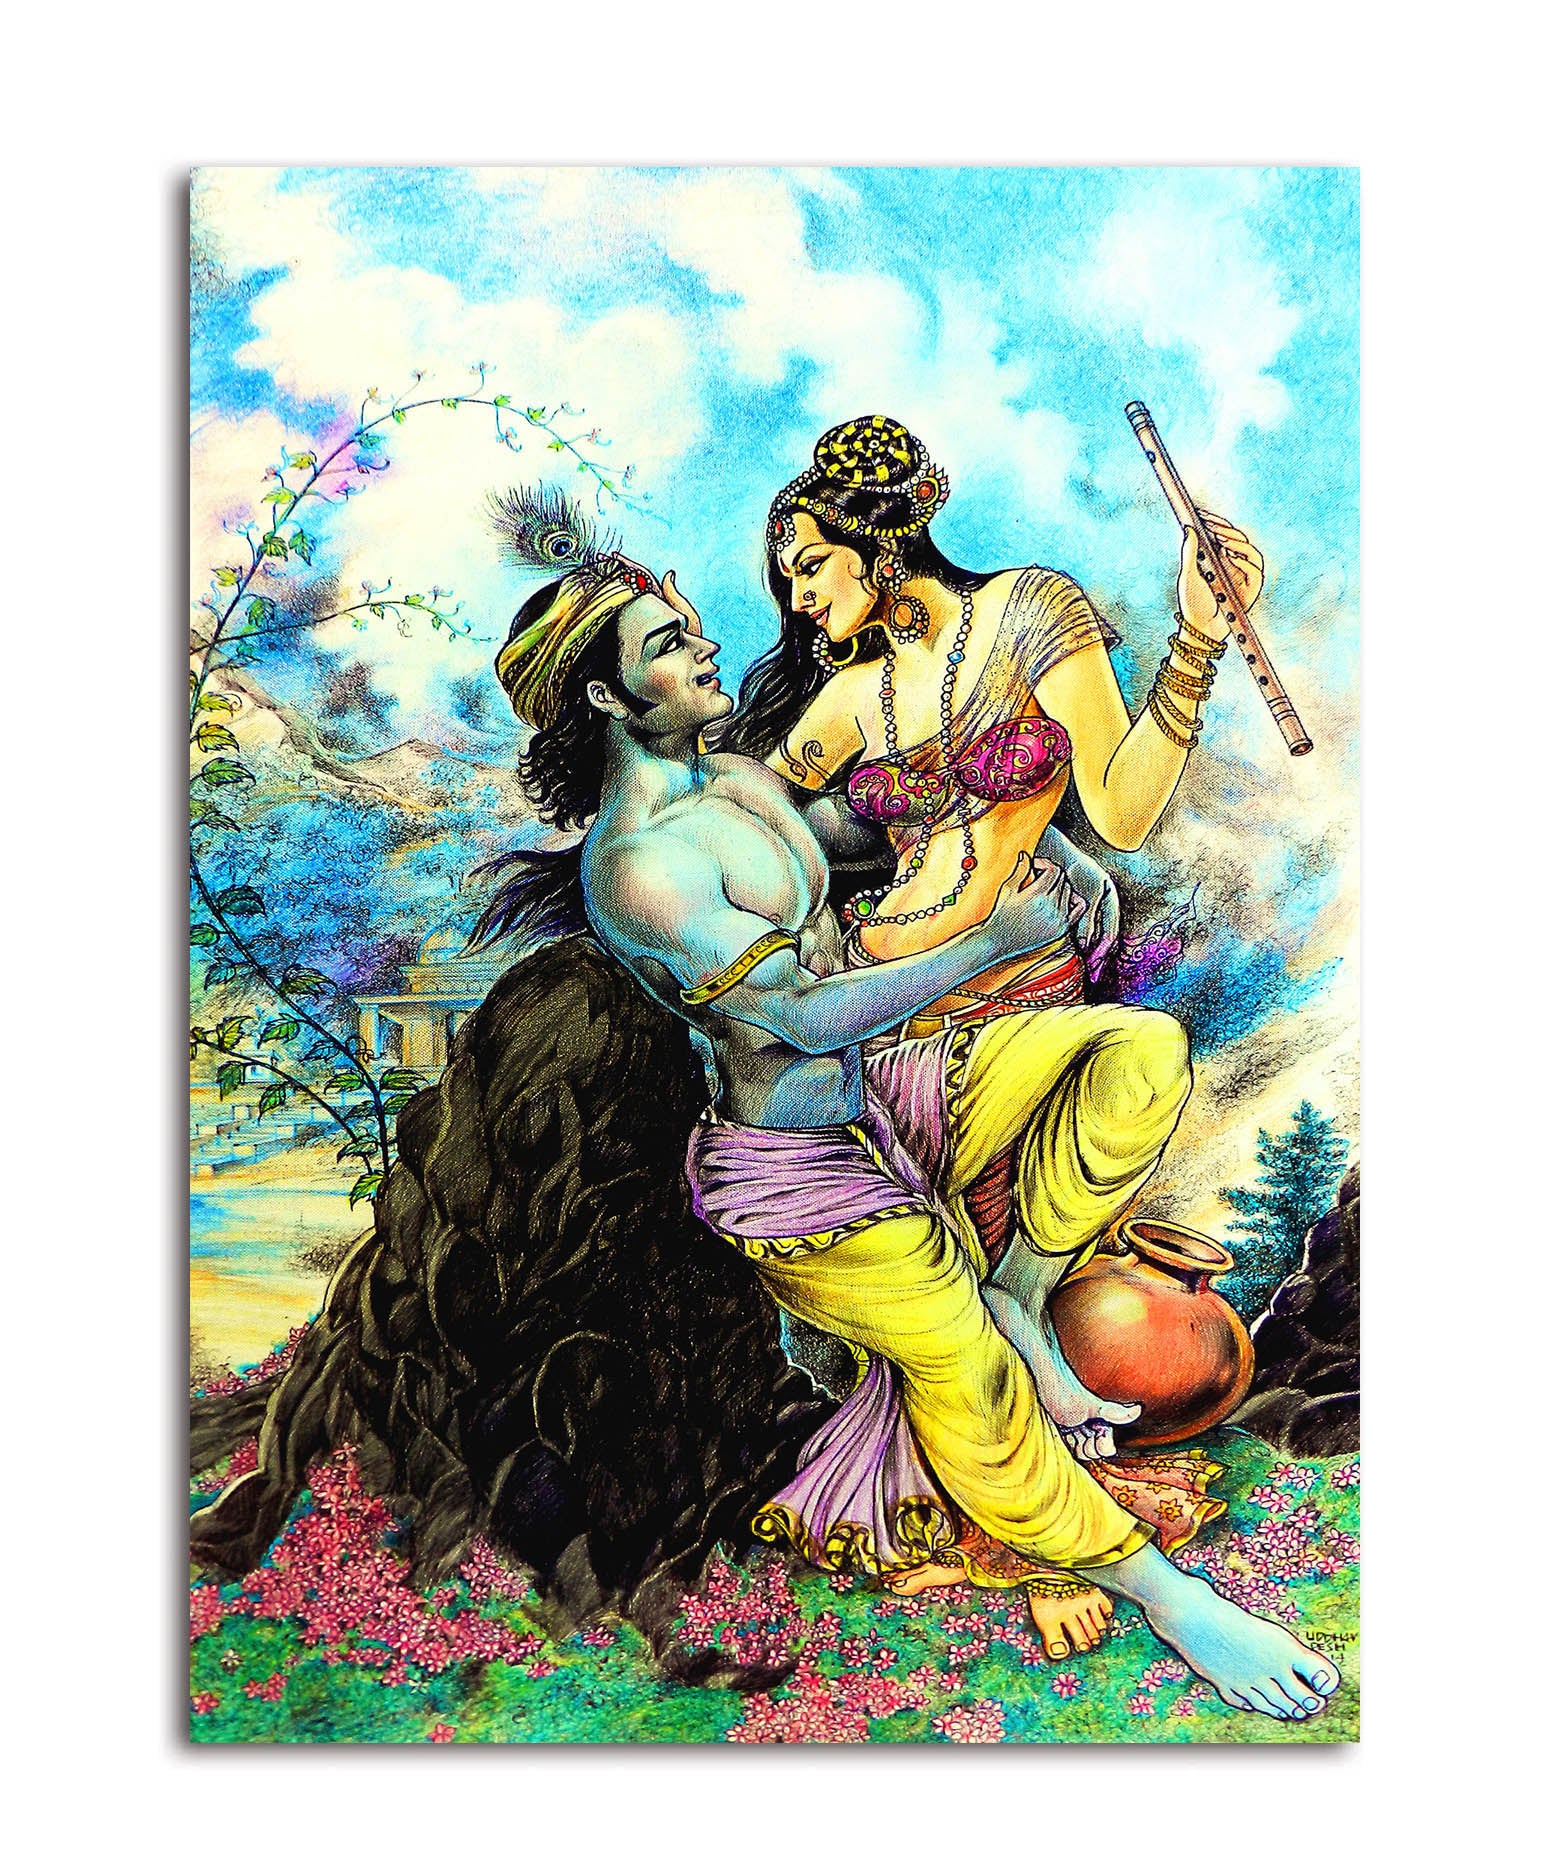 Jai Sri Krishna - Unframed Canvas Painting